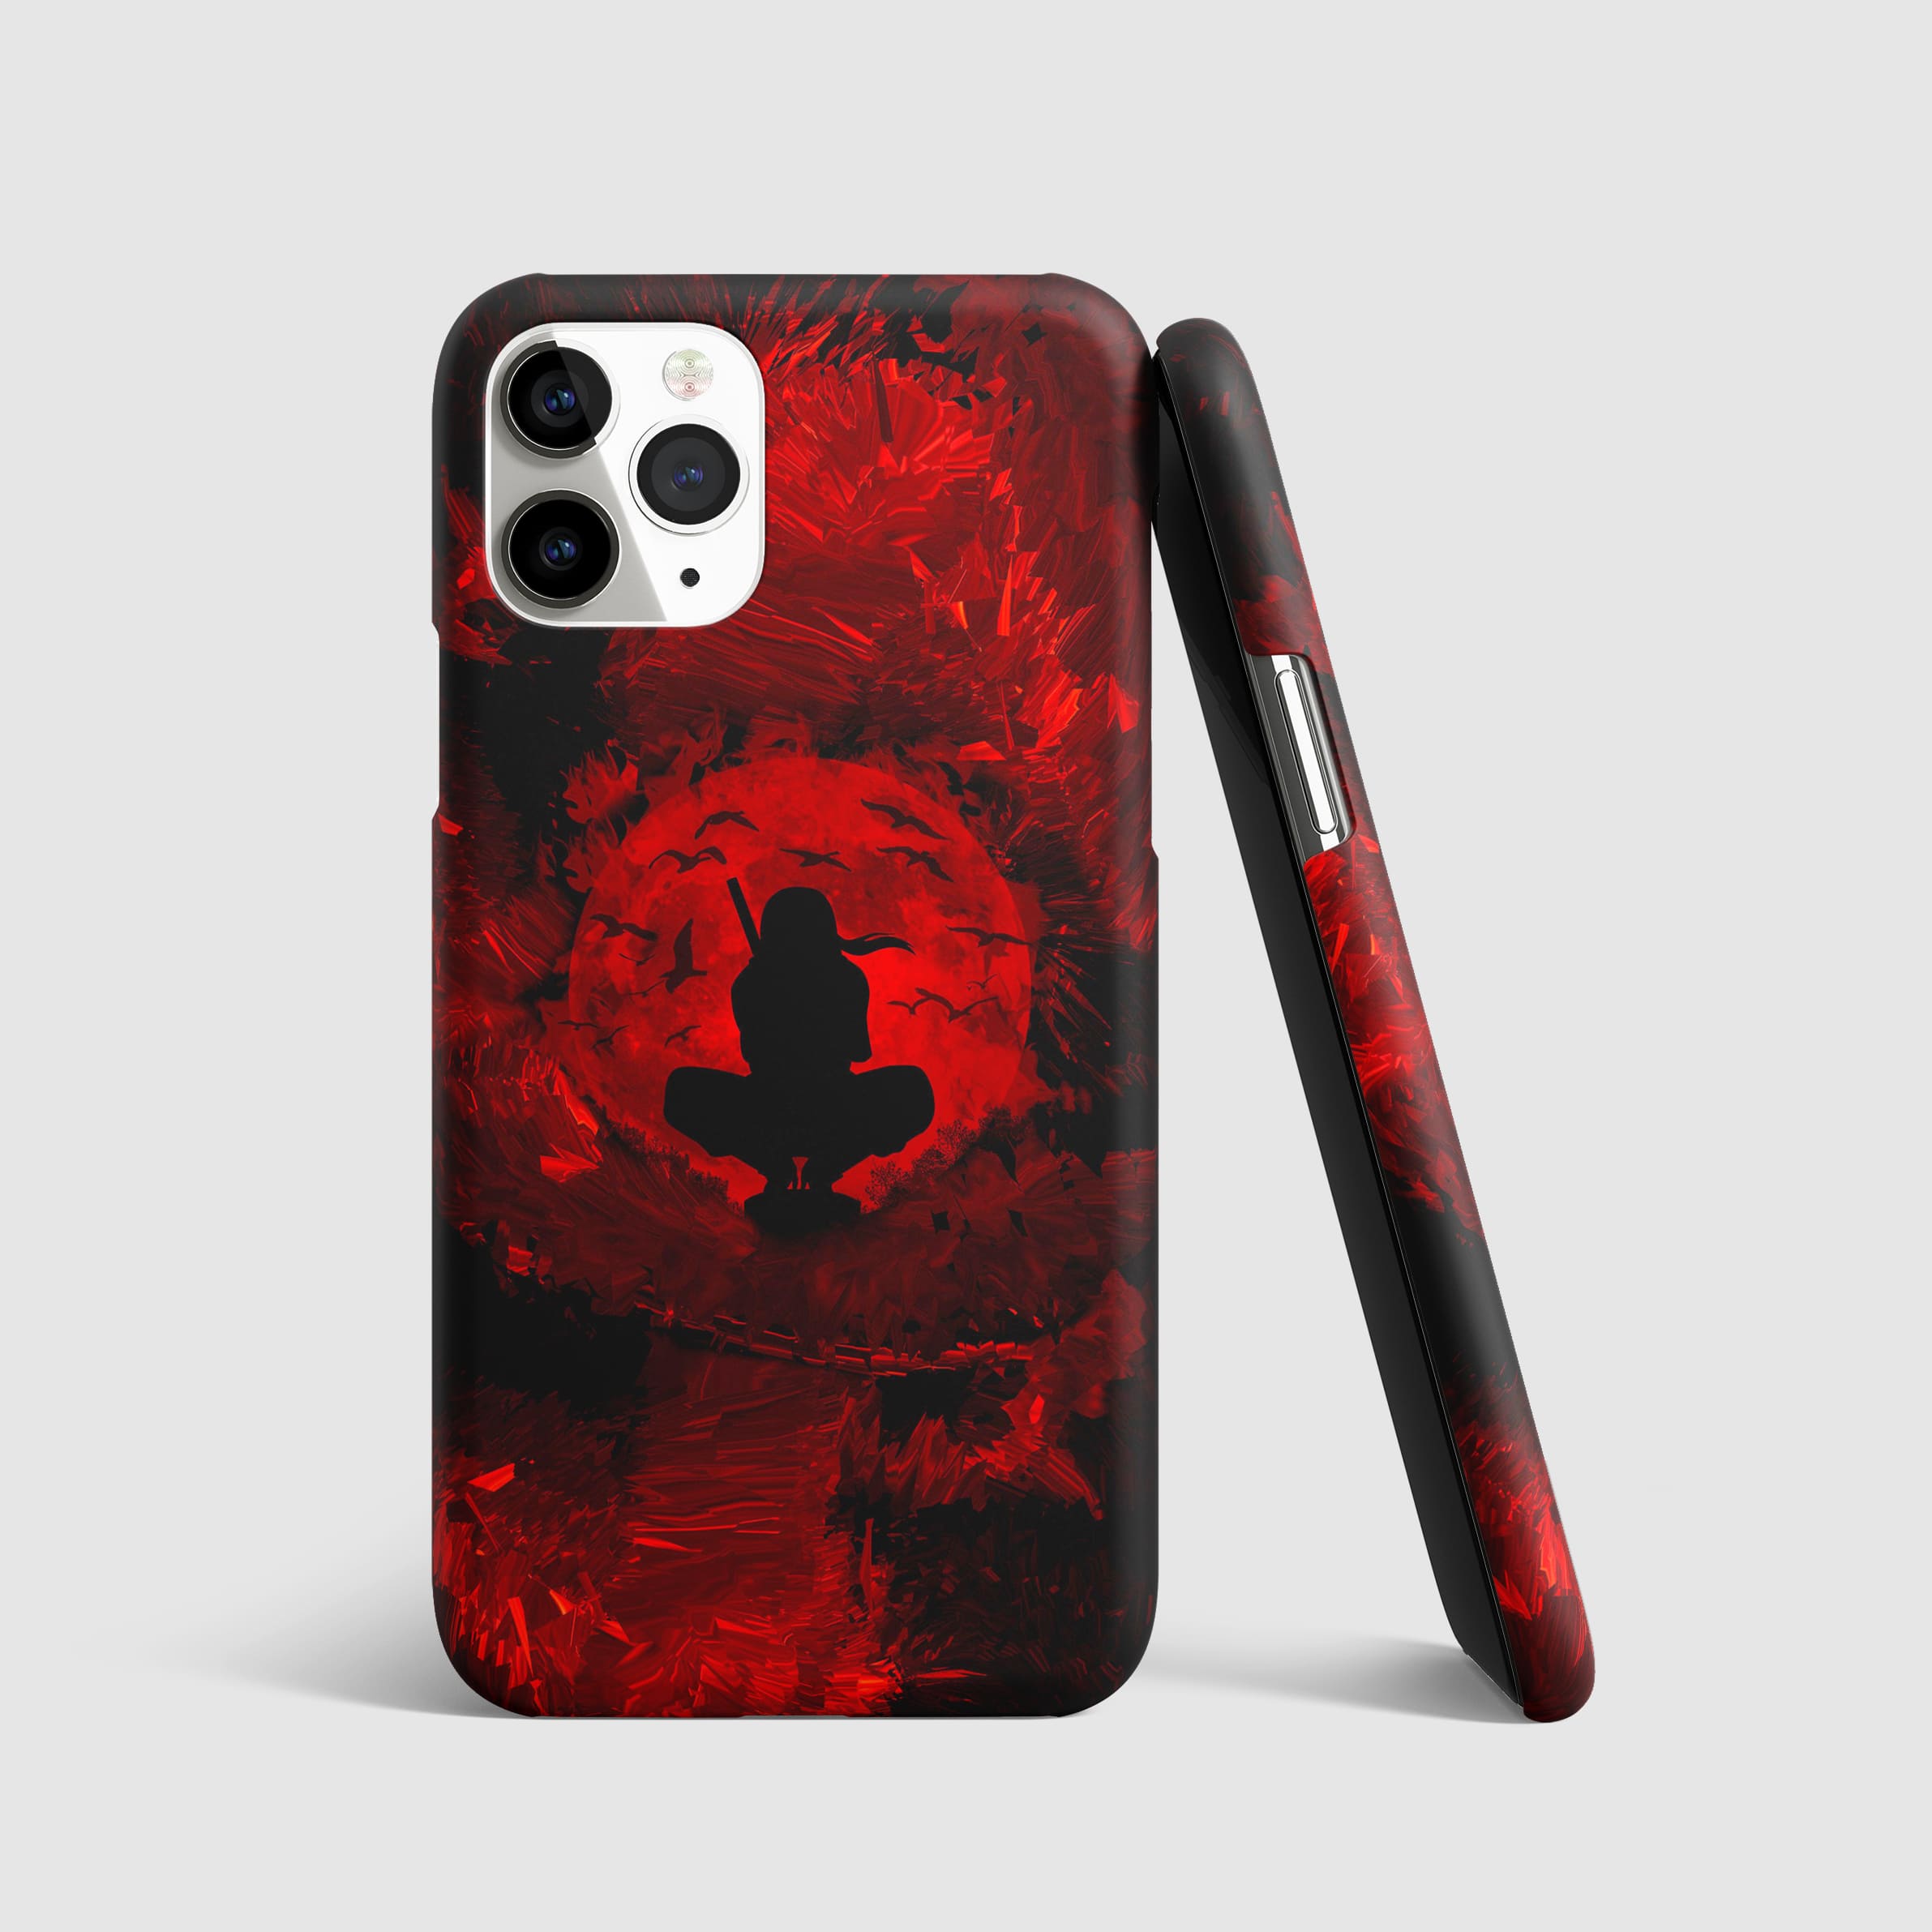 Sasuke Uchiha Red Moon Phone Cover with 3D matte finish, featuring Sasuke under a striking red moon.